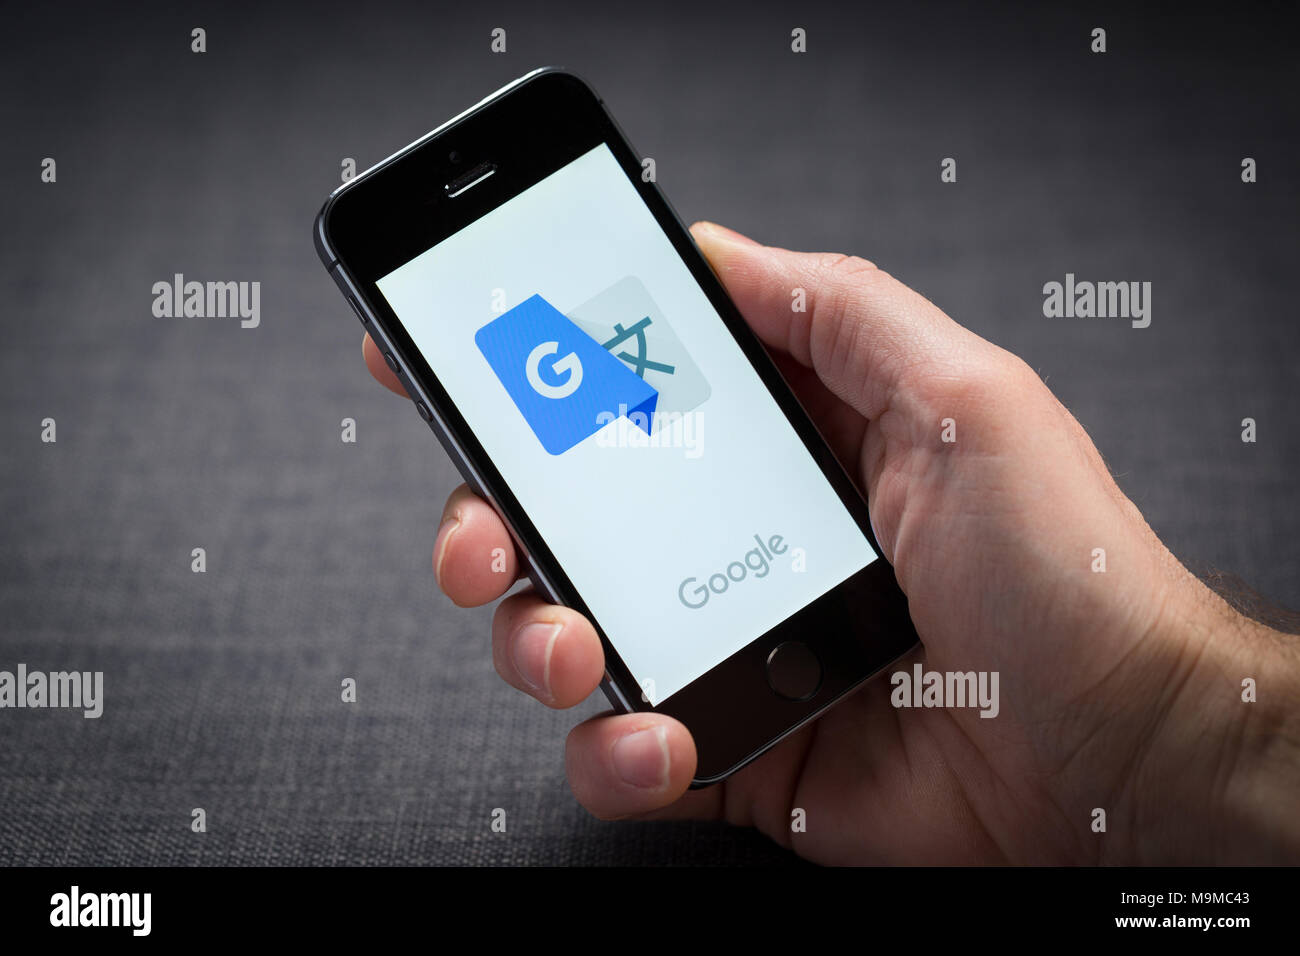 google translation apps for iphone